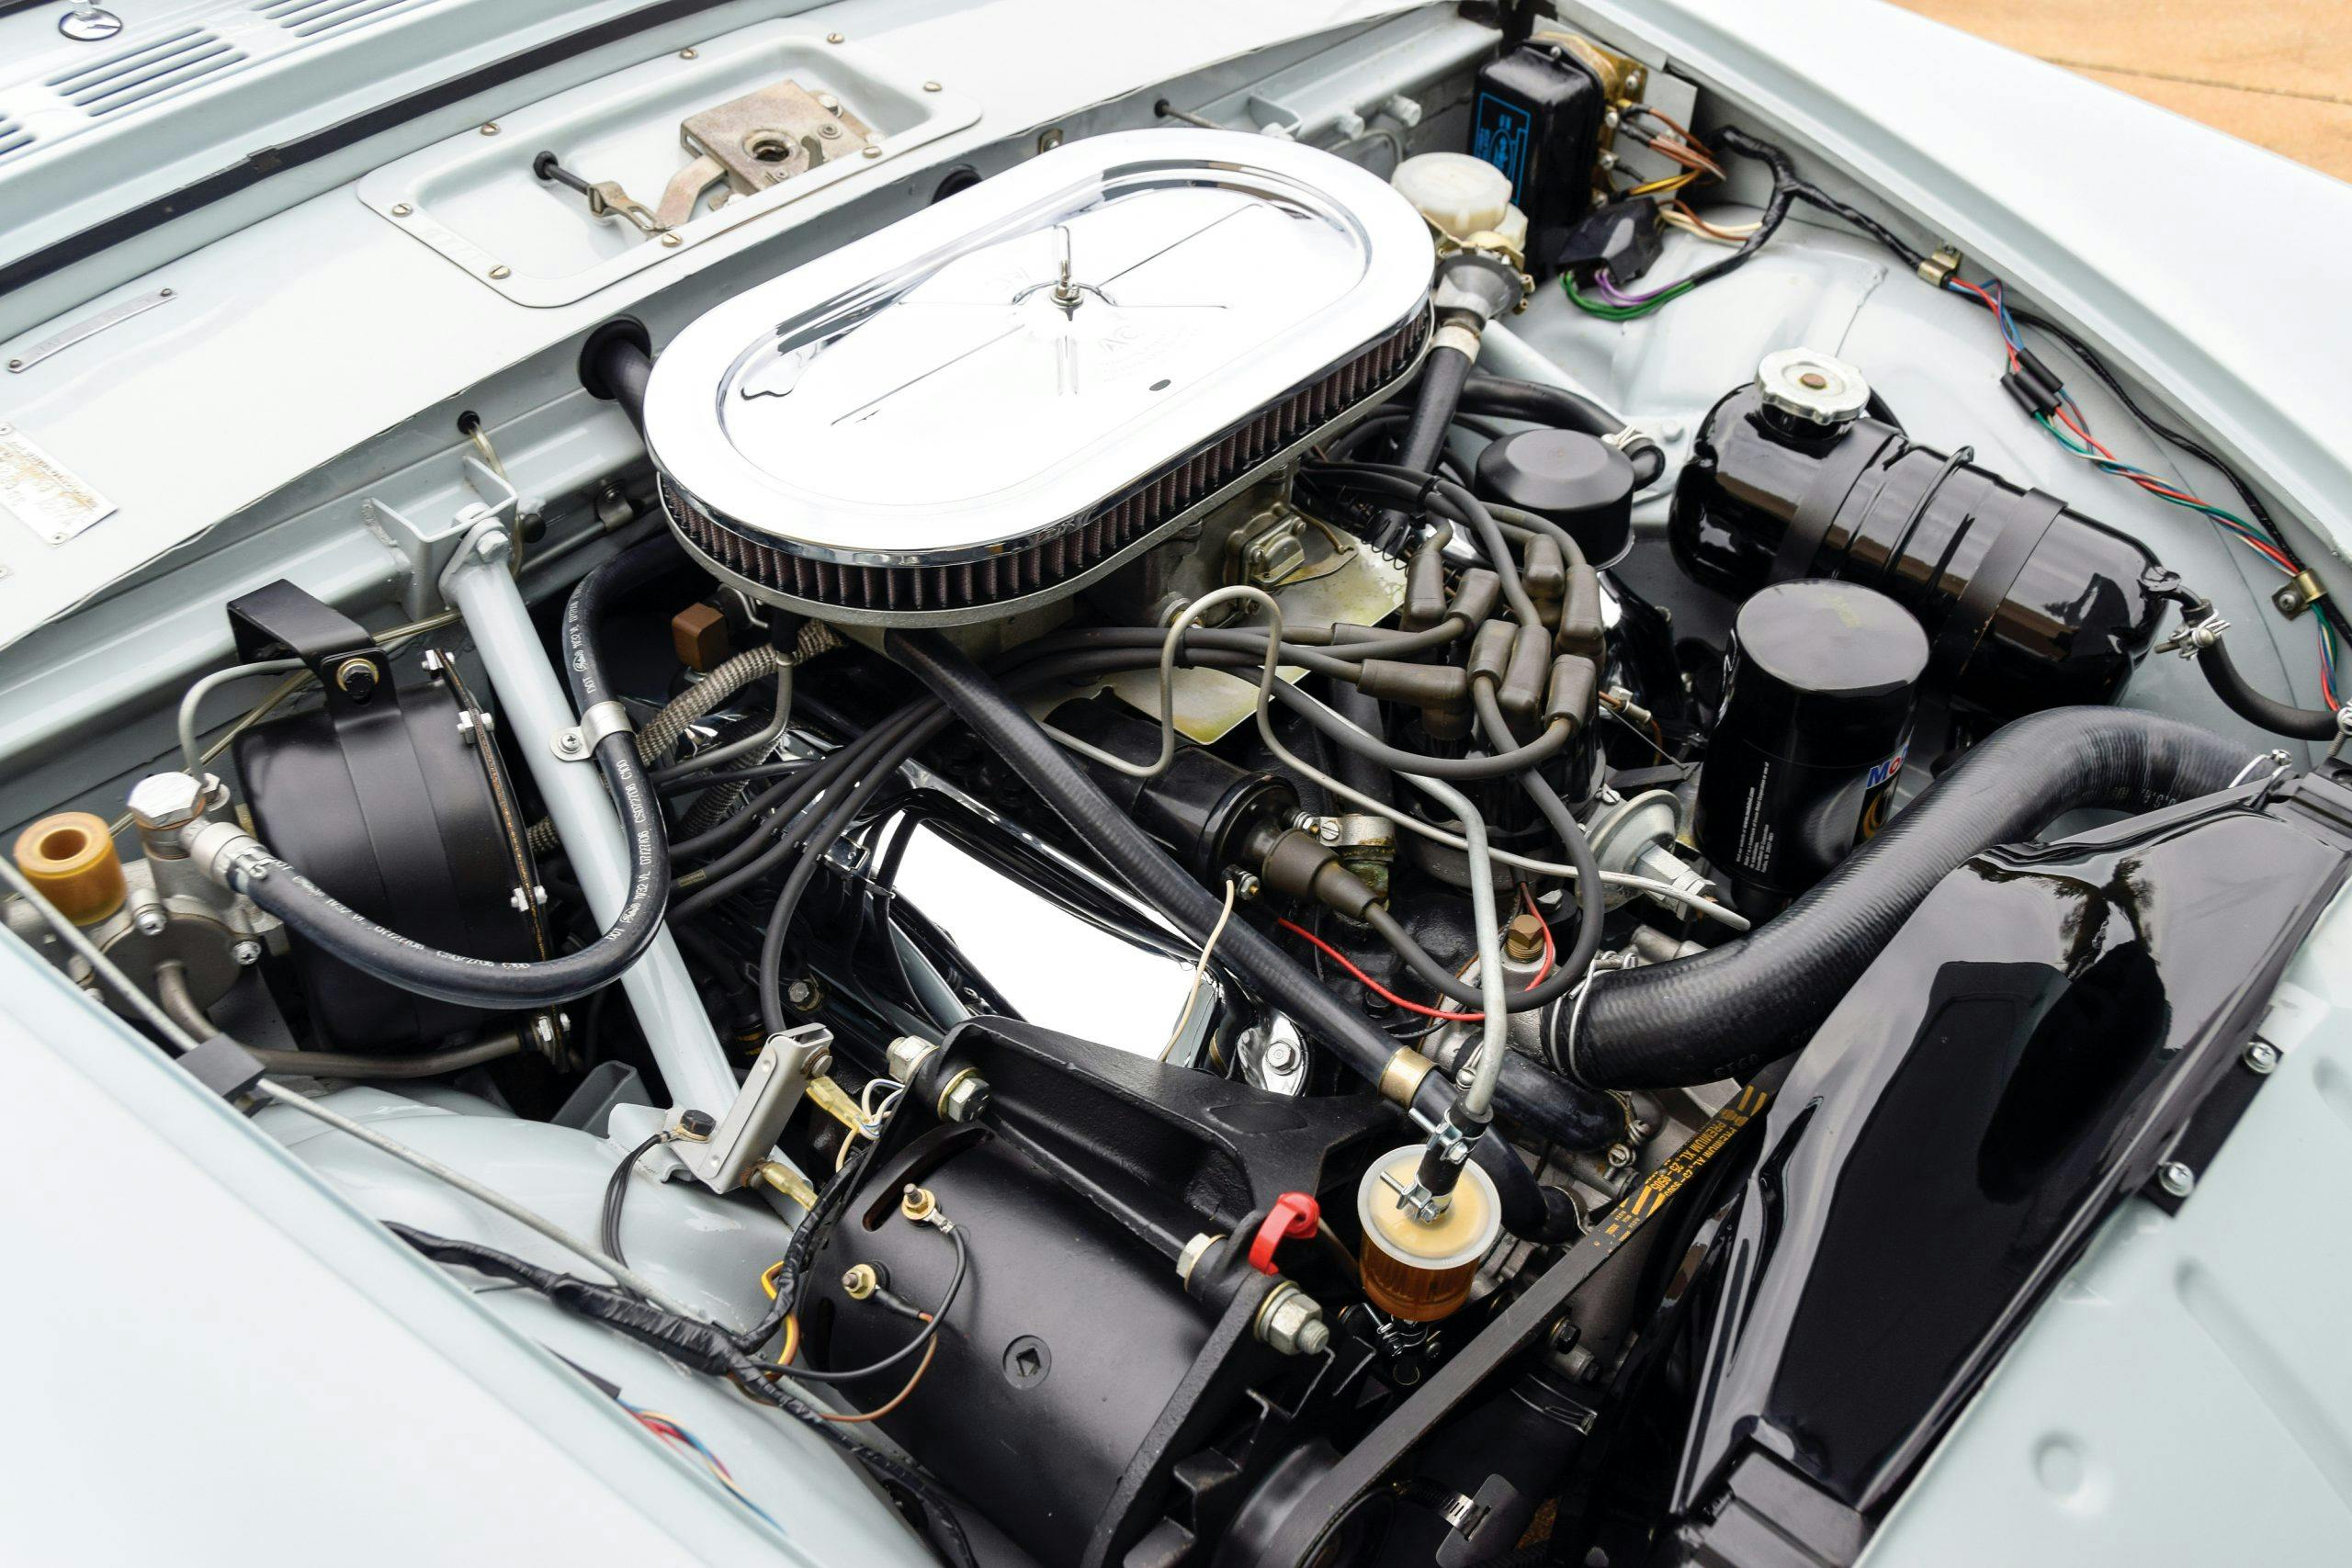 1964-Sunbeam-Tiger-Mk-1 engine